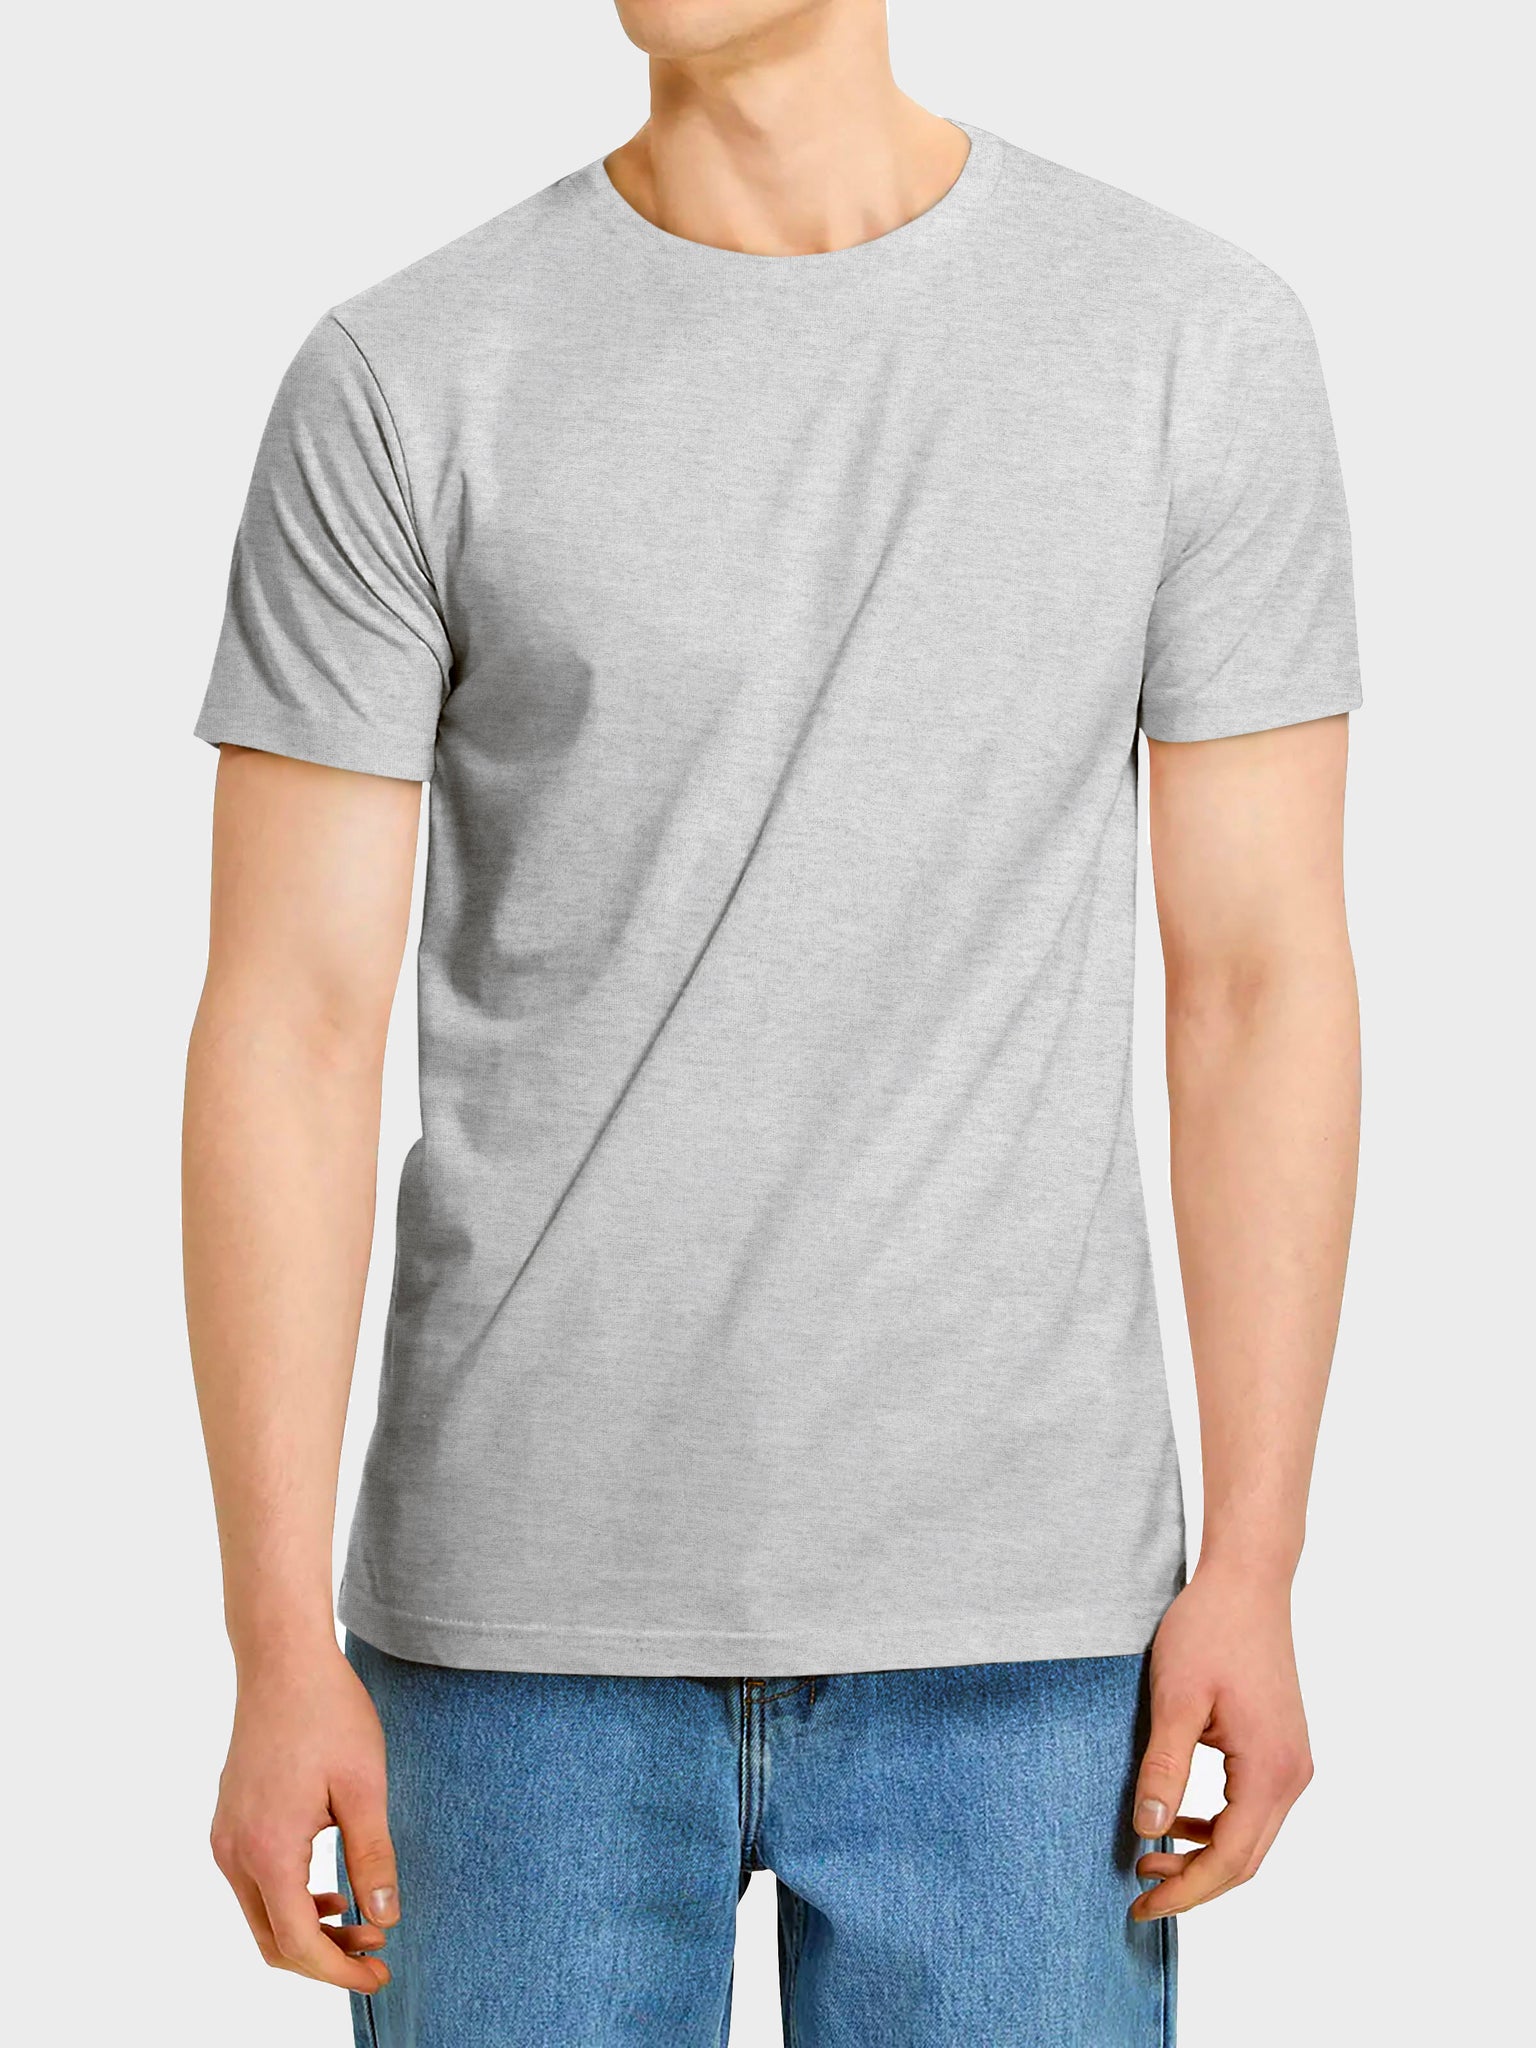 Best Classic Short-Sleeve T-Shirts